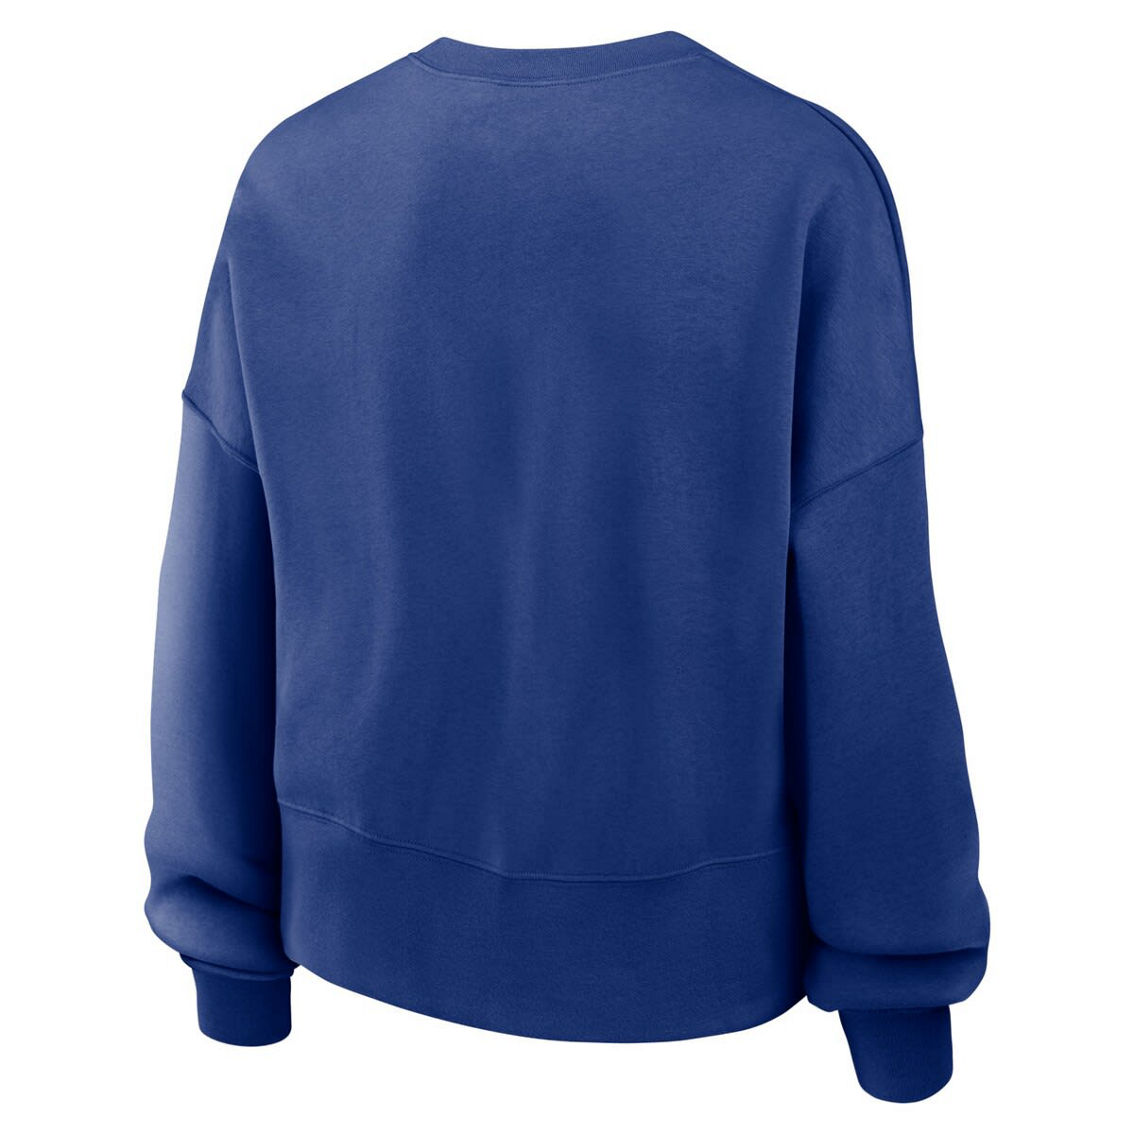 Nike Women's Royal Philadelphia Phillies Pullover Sweatshirt - Image 4 of 4